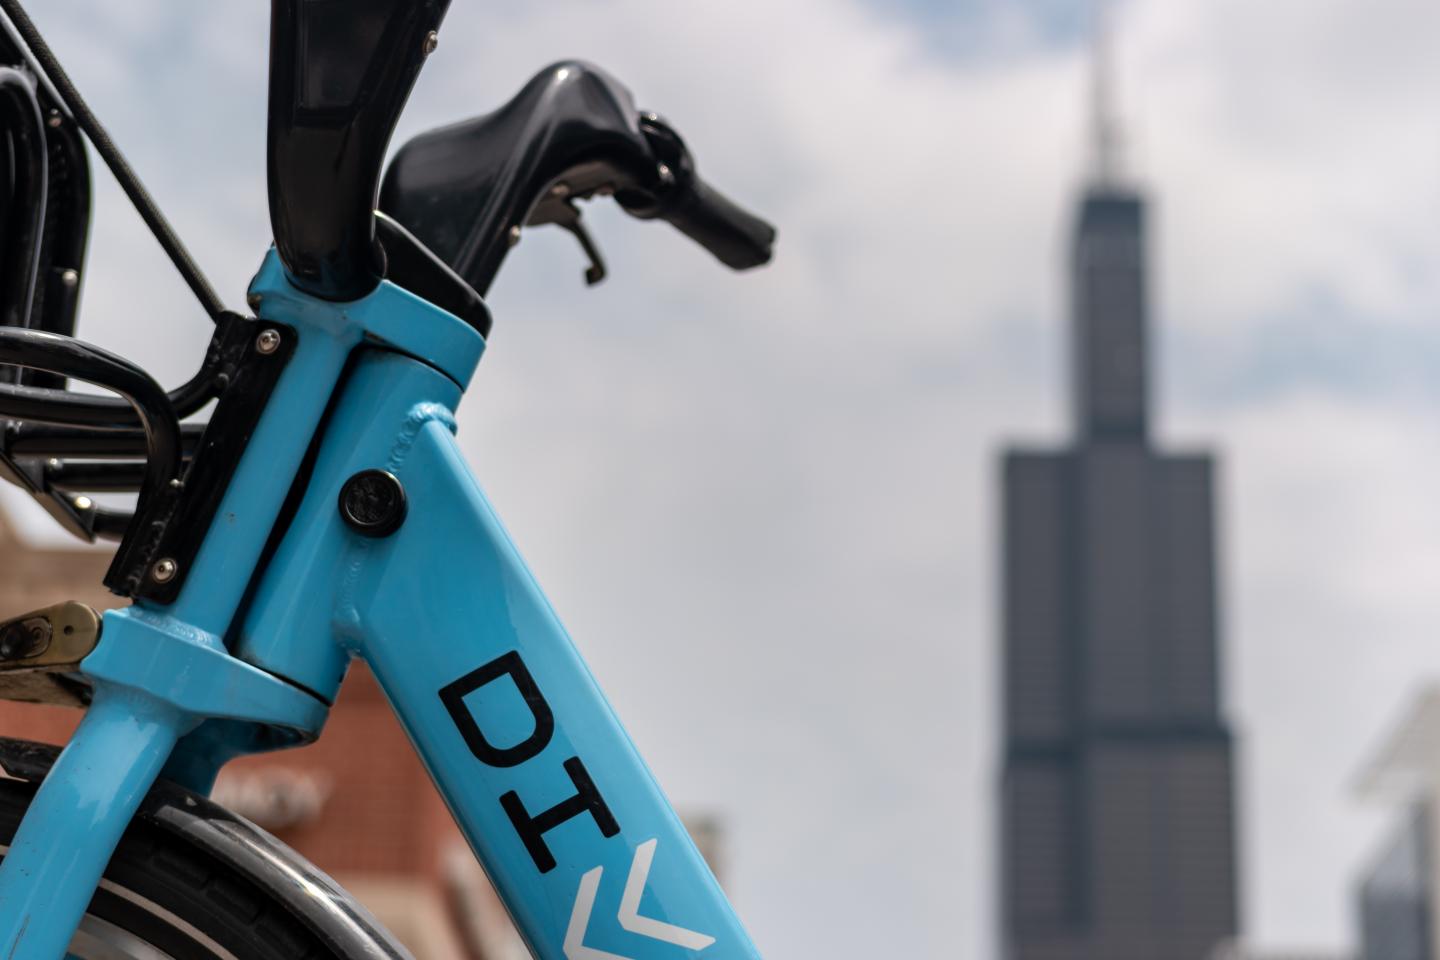 Divvy Bikes in Chicago